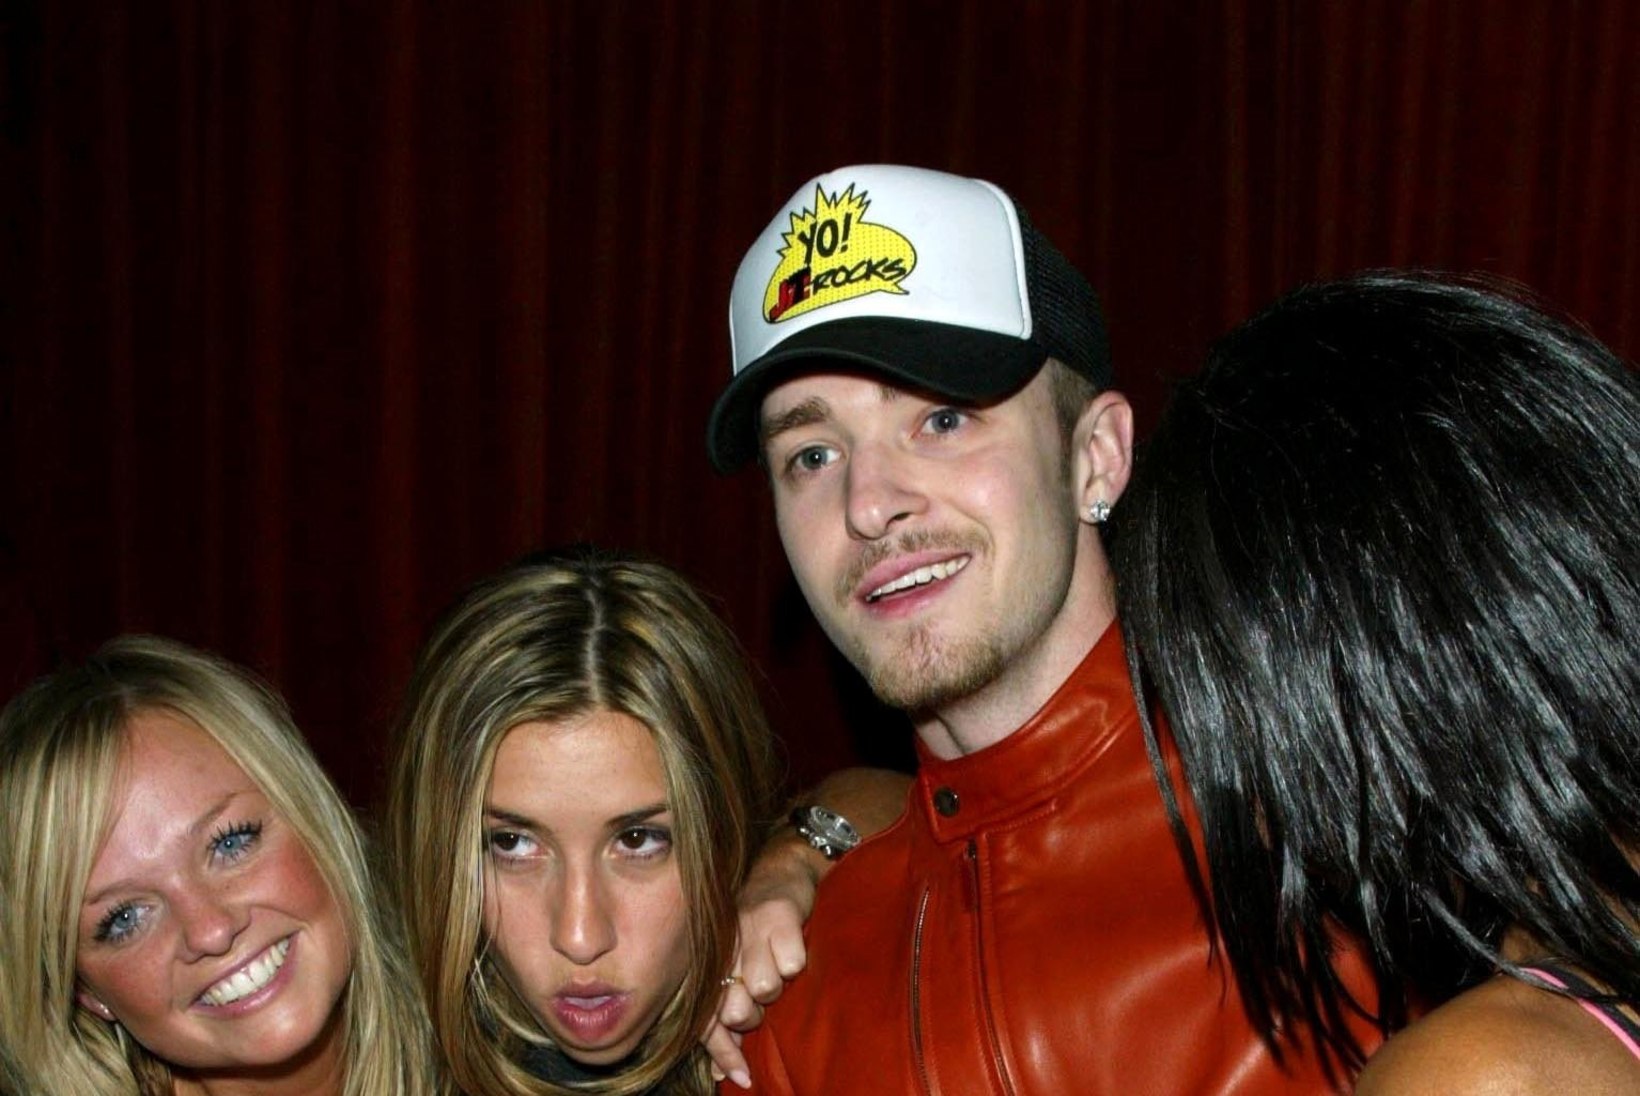 Fännid elevil: millise Spice Girliga magas Justin Timberlake?!